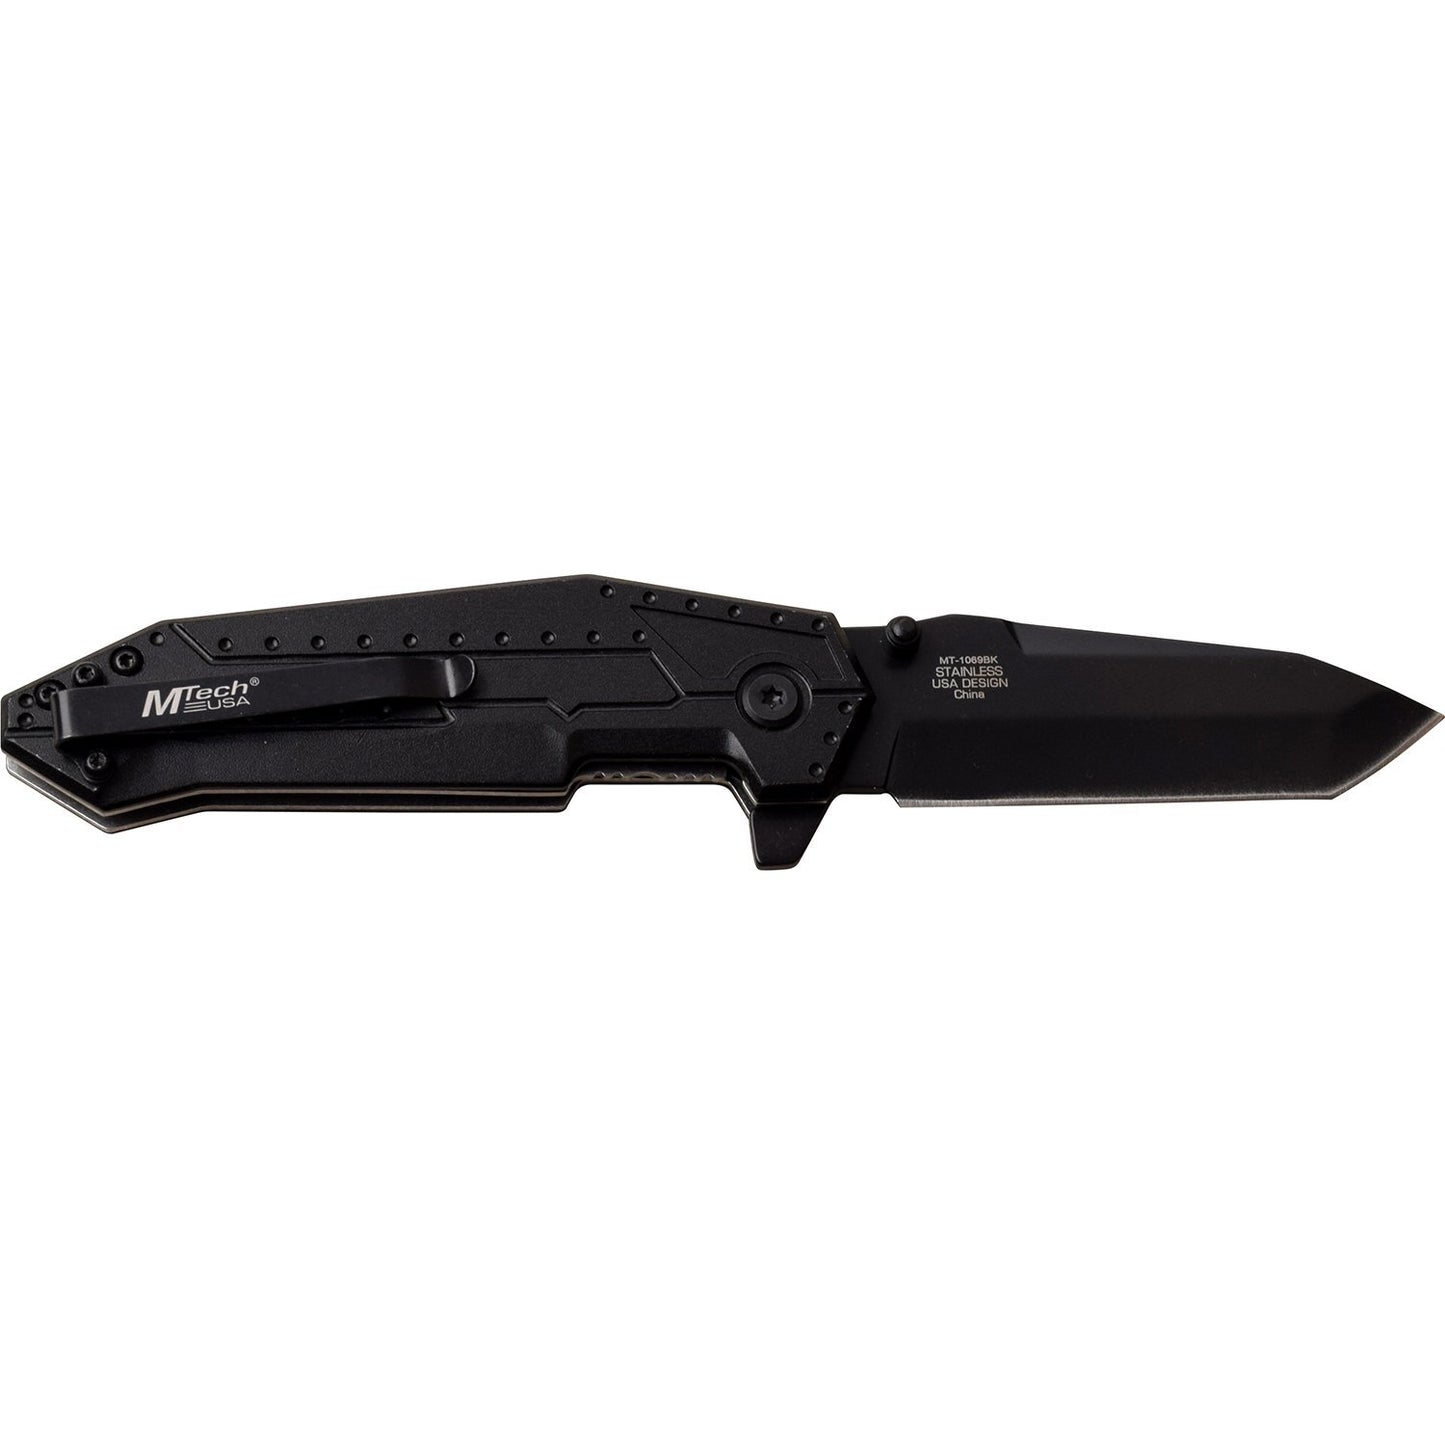 Mtech Mtech Tactical Tanto Blade Folding Knife - Ball Bearing Pivot #mt-1069Bk Black